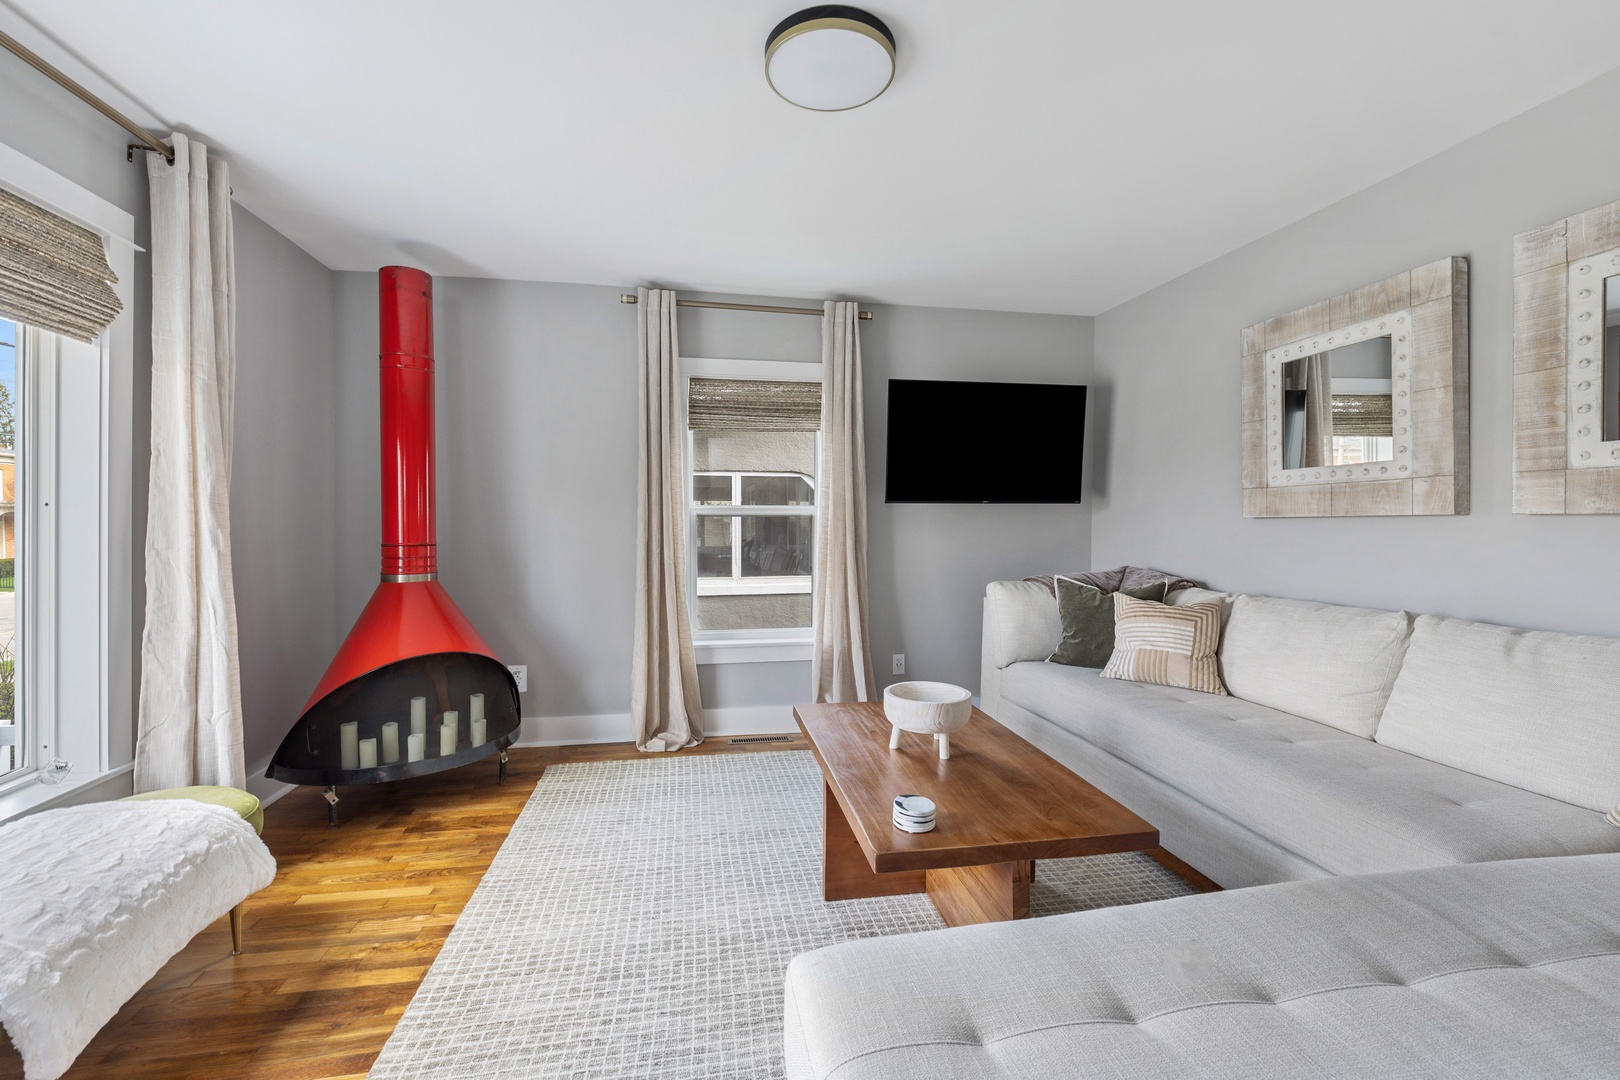 Good Karma Guesthouse has elegant, comfy furnishings & wood floors throughout.